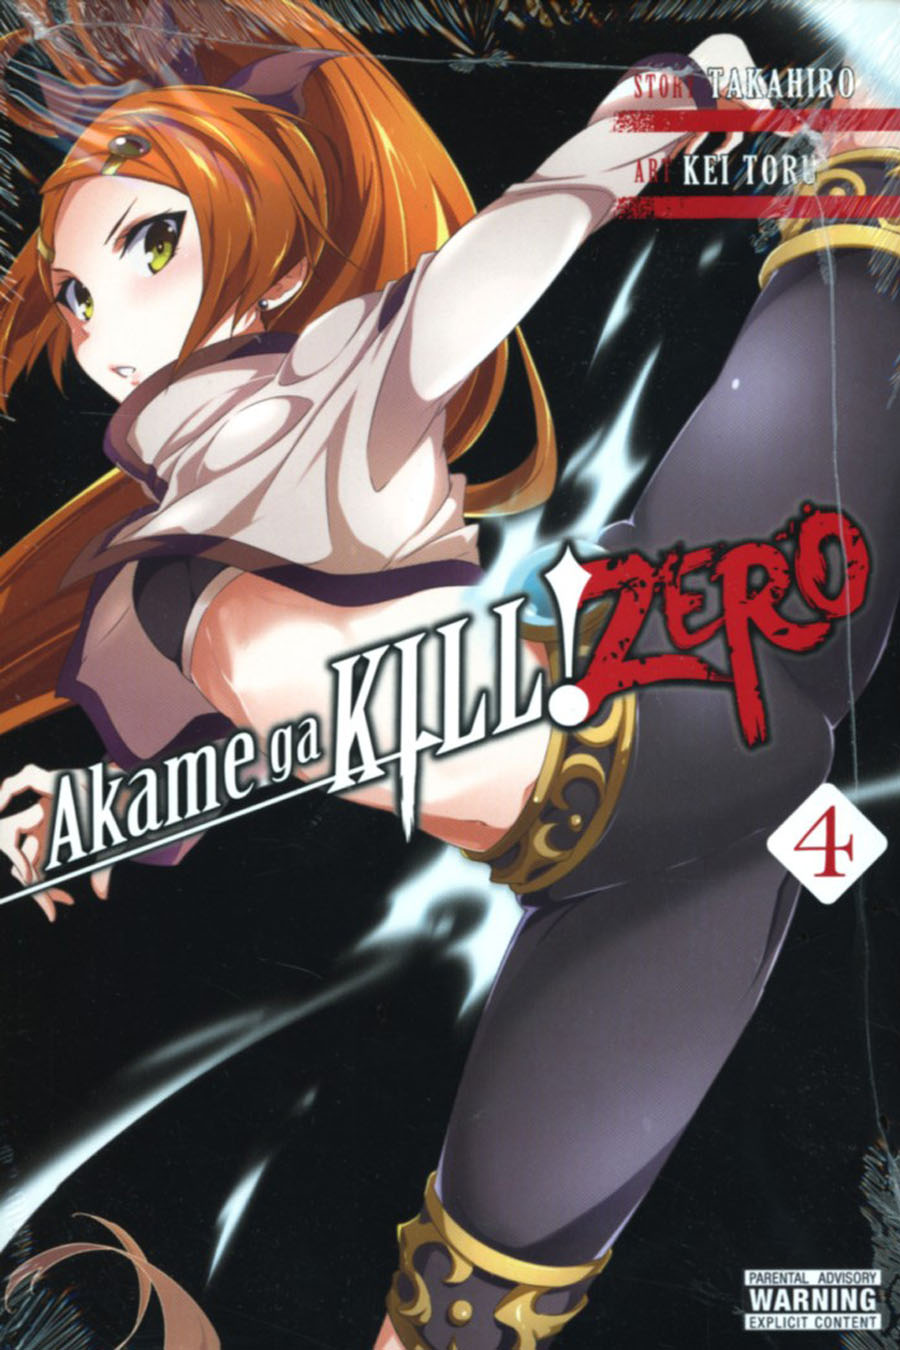 Akame ga KILL! ZERO, Vol. 3 on Apple Books